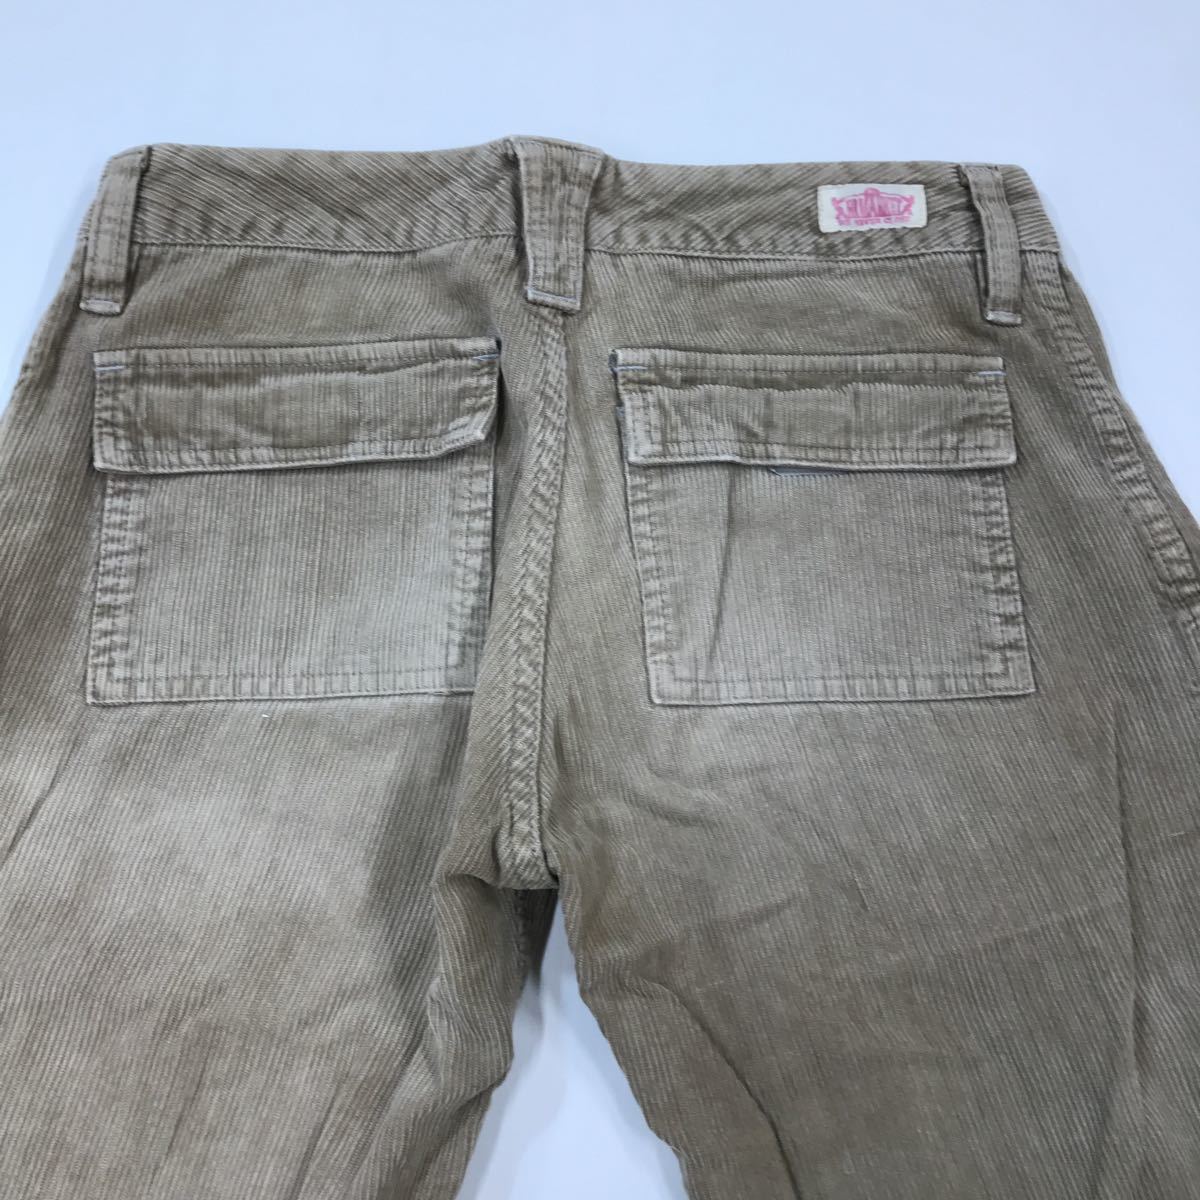  Hollywood Ranch Market IRMARKET брюки вельвет брюки хлопок размер 1 212-15